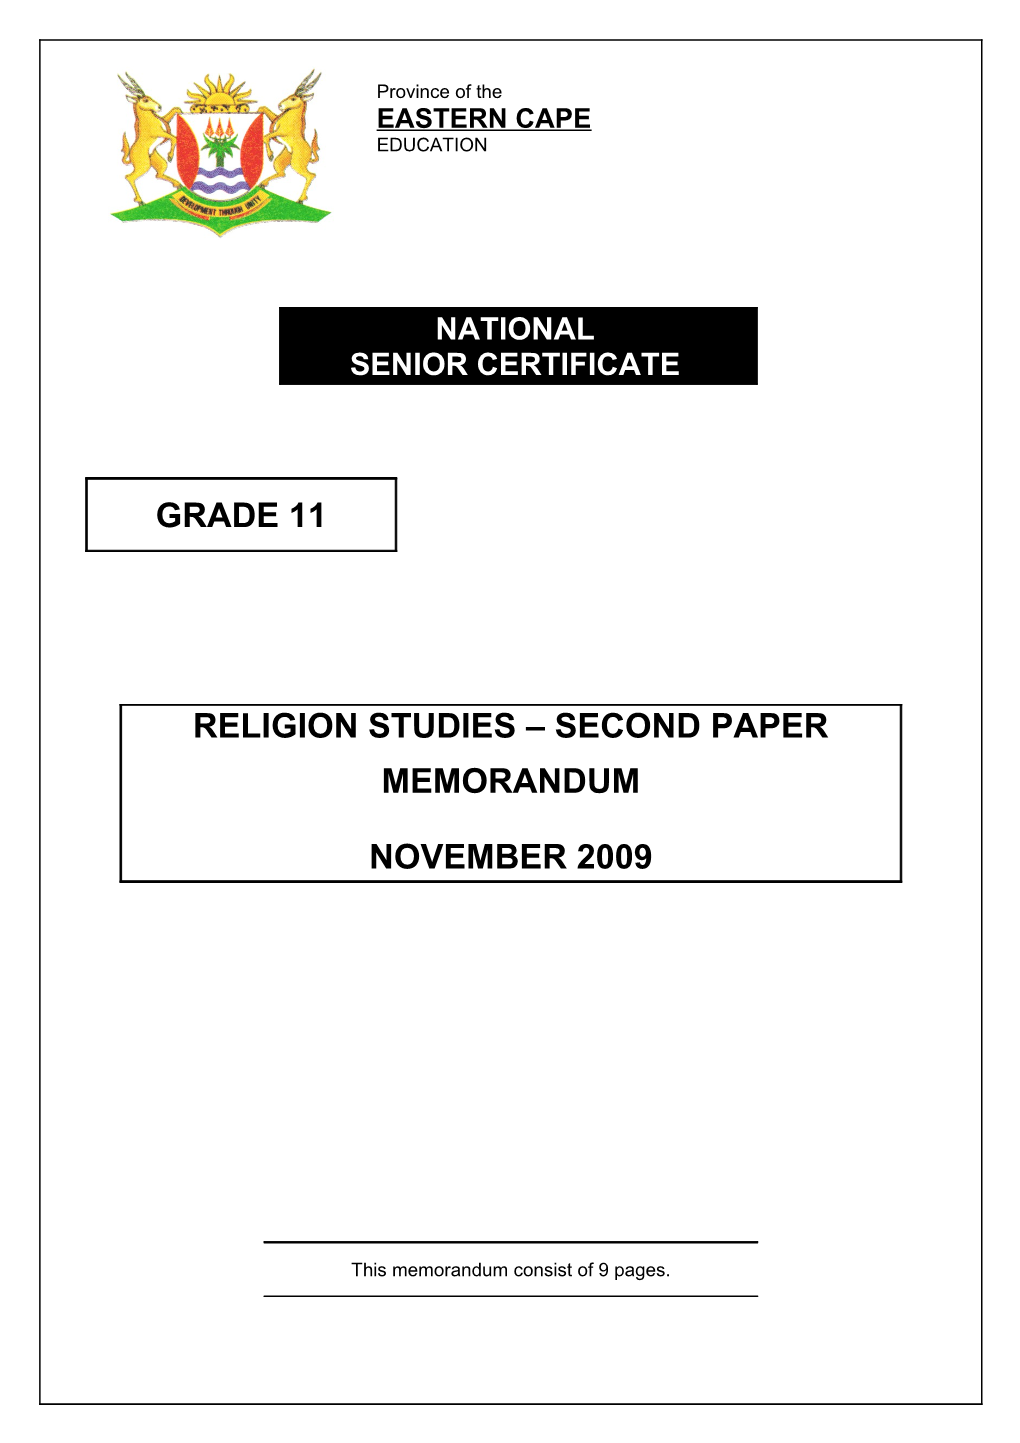 (November 2009) Religion Studies Second Paper 9